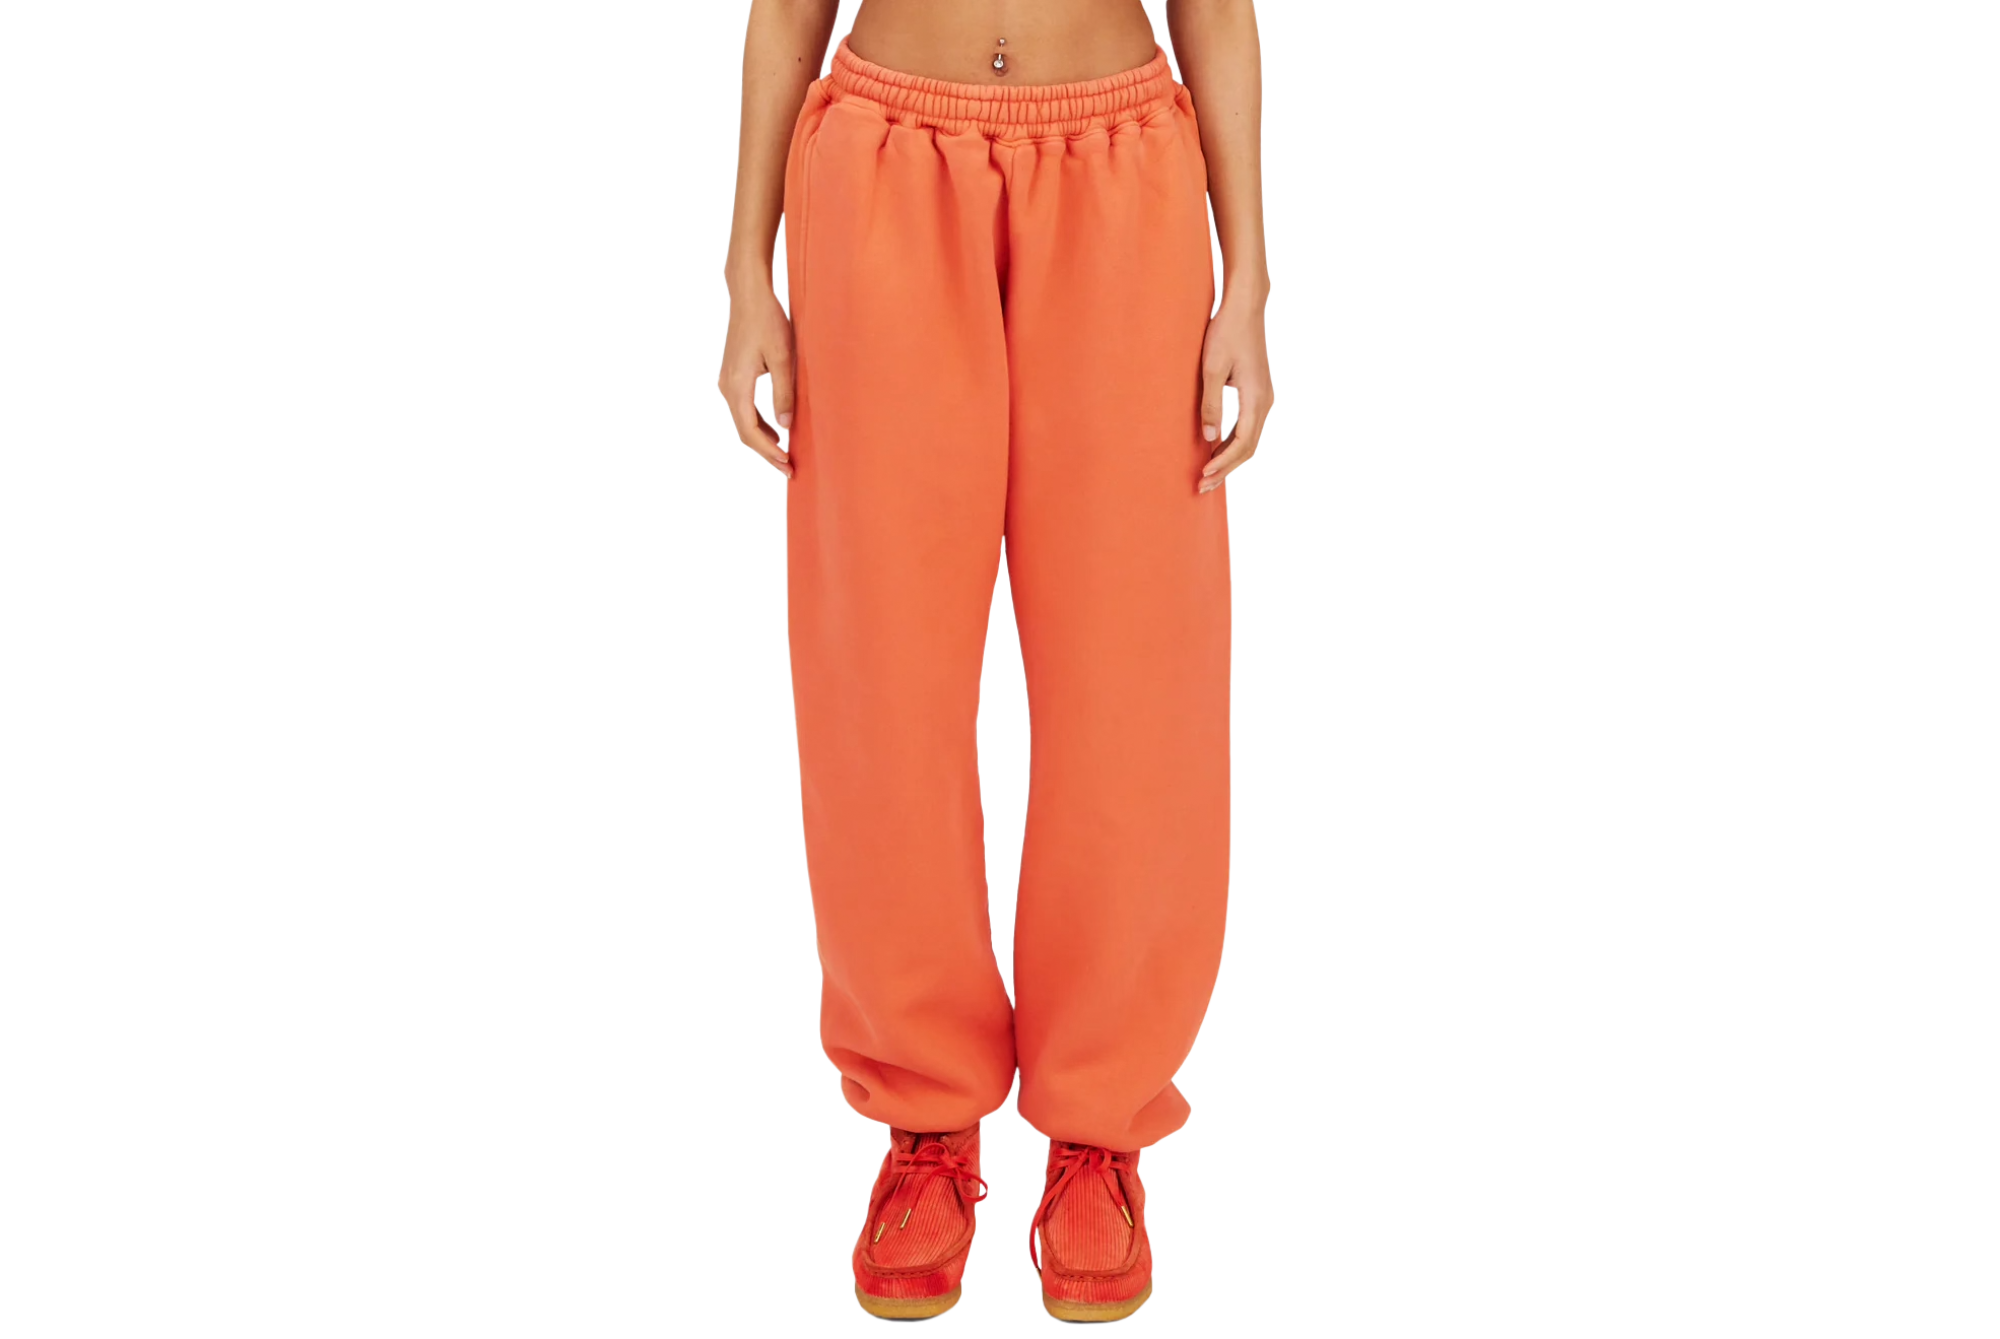 Orange sweatpants from Mayde Worldwide